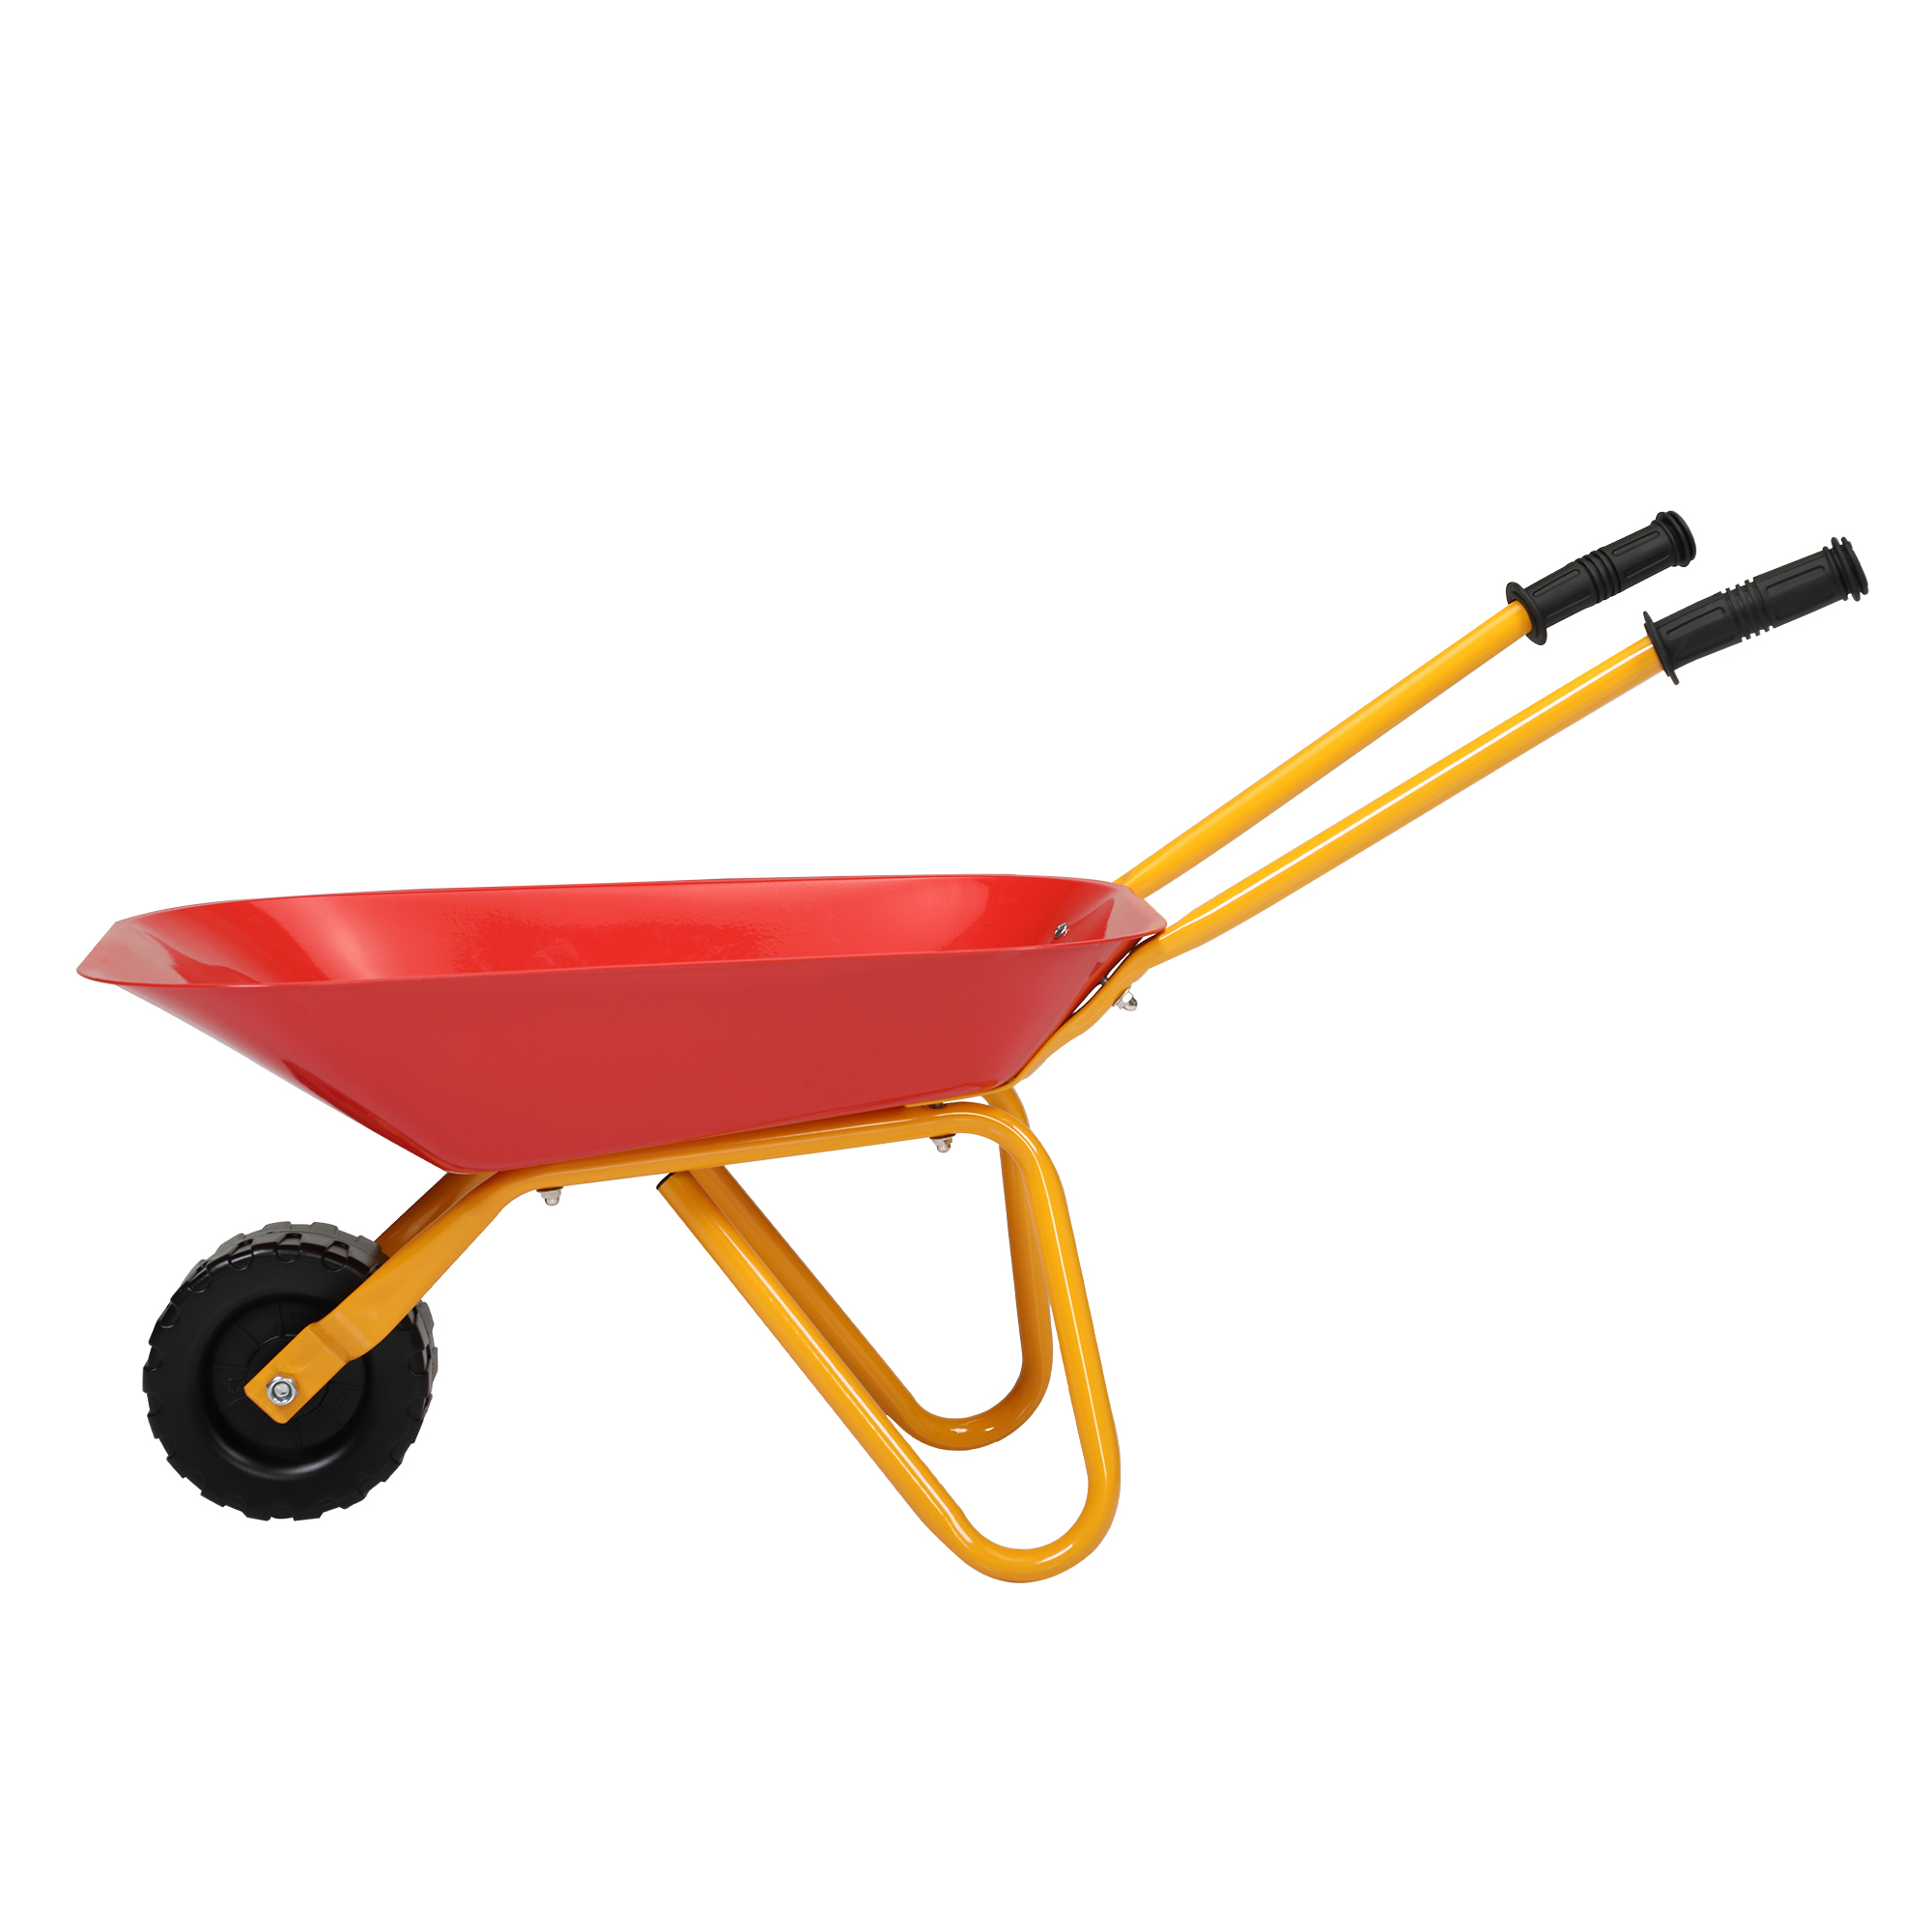 Veryke Kids Wheelbarrow, Outdoor Kids Toy Wheelbarrow w/Steel Tray and Rubber Hand Grips, Red - image 4 of 8